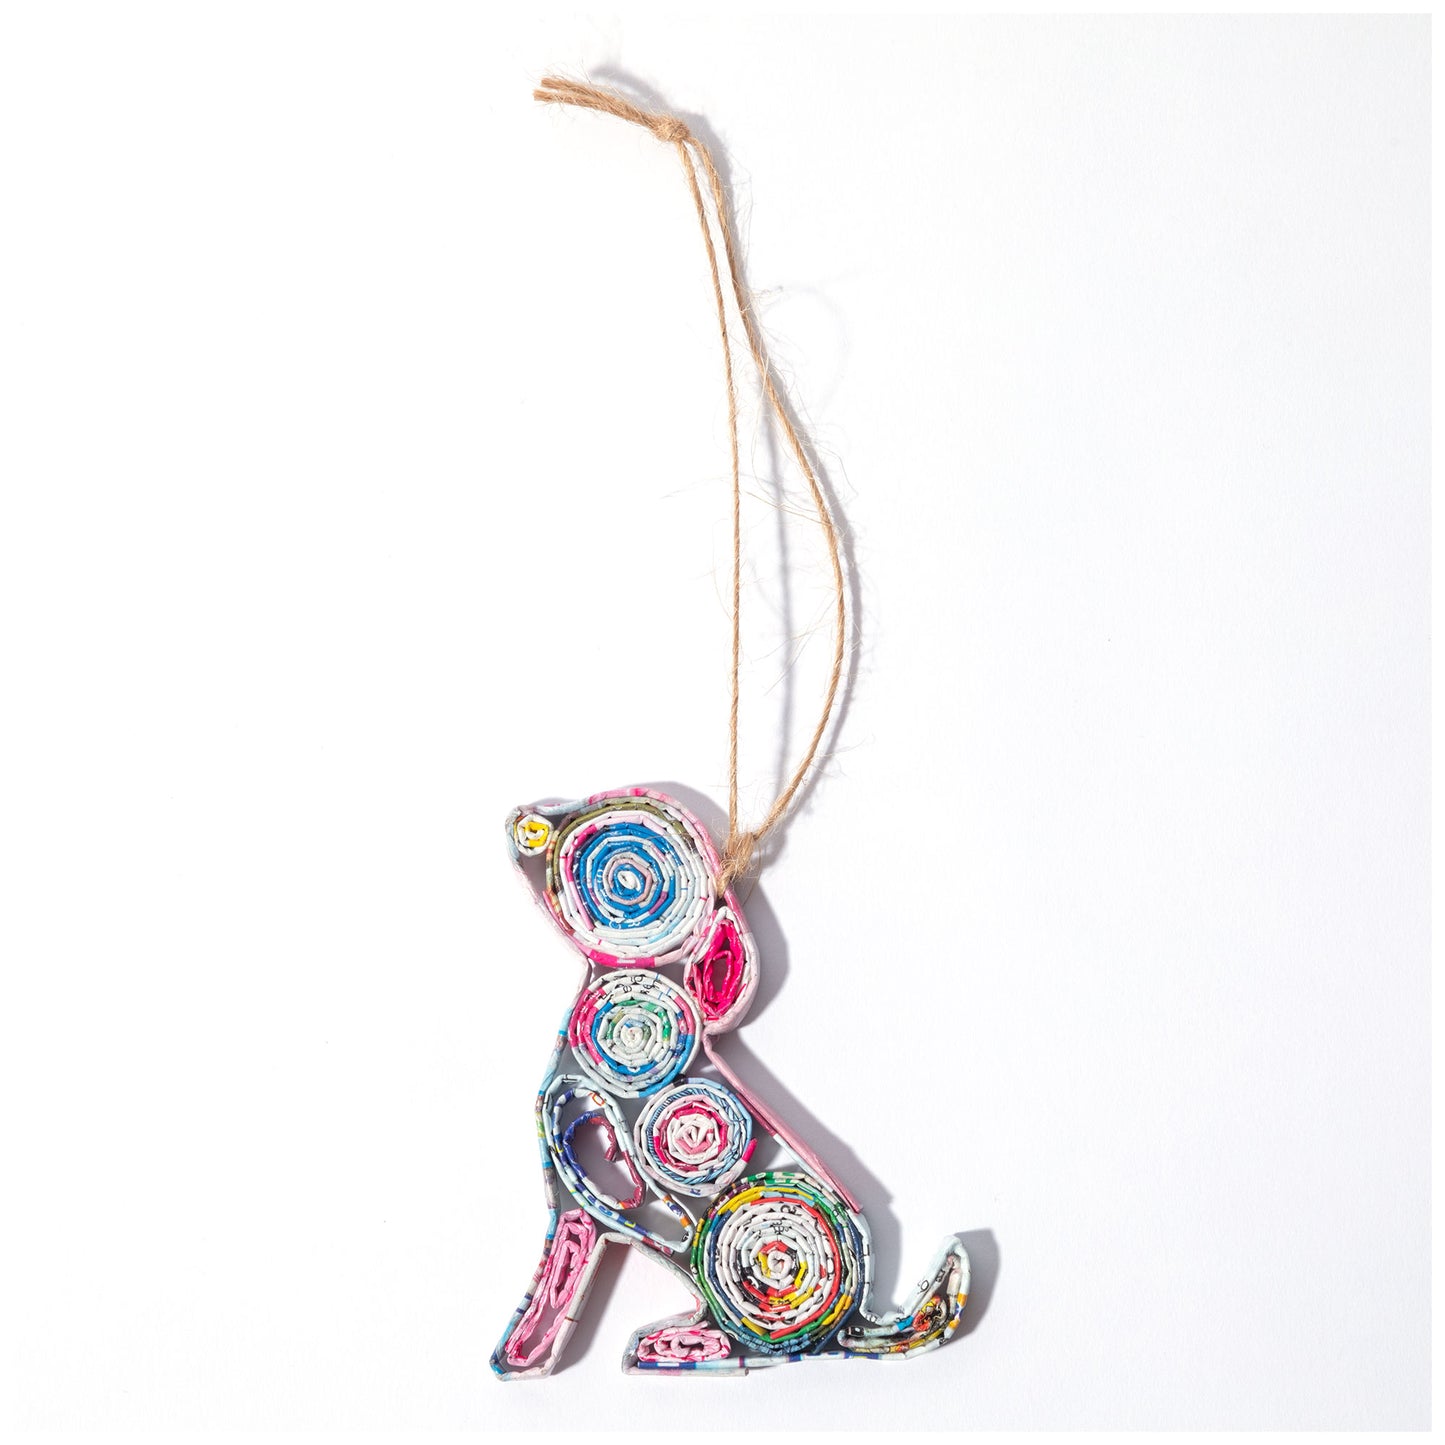 Recycled Magazine Furry Friend Ornament | Handmade, Fair Trade